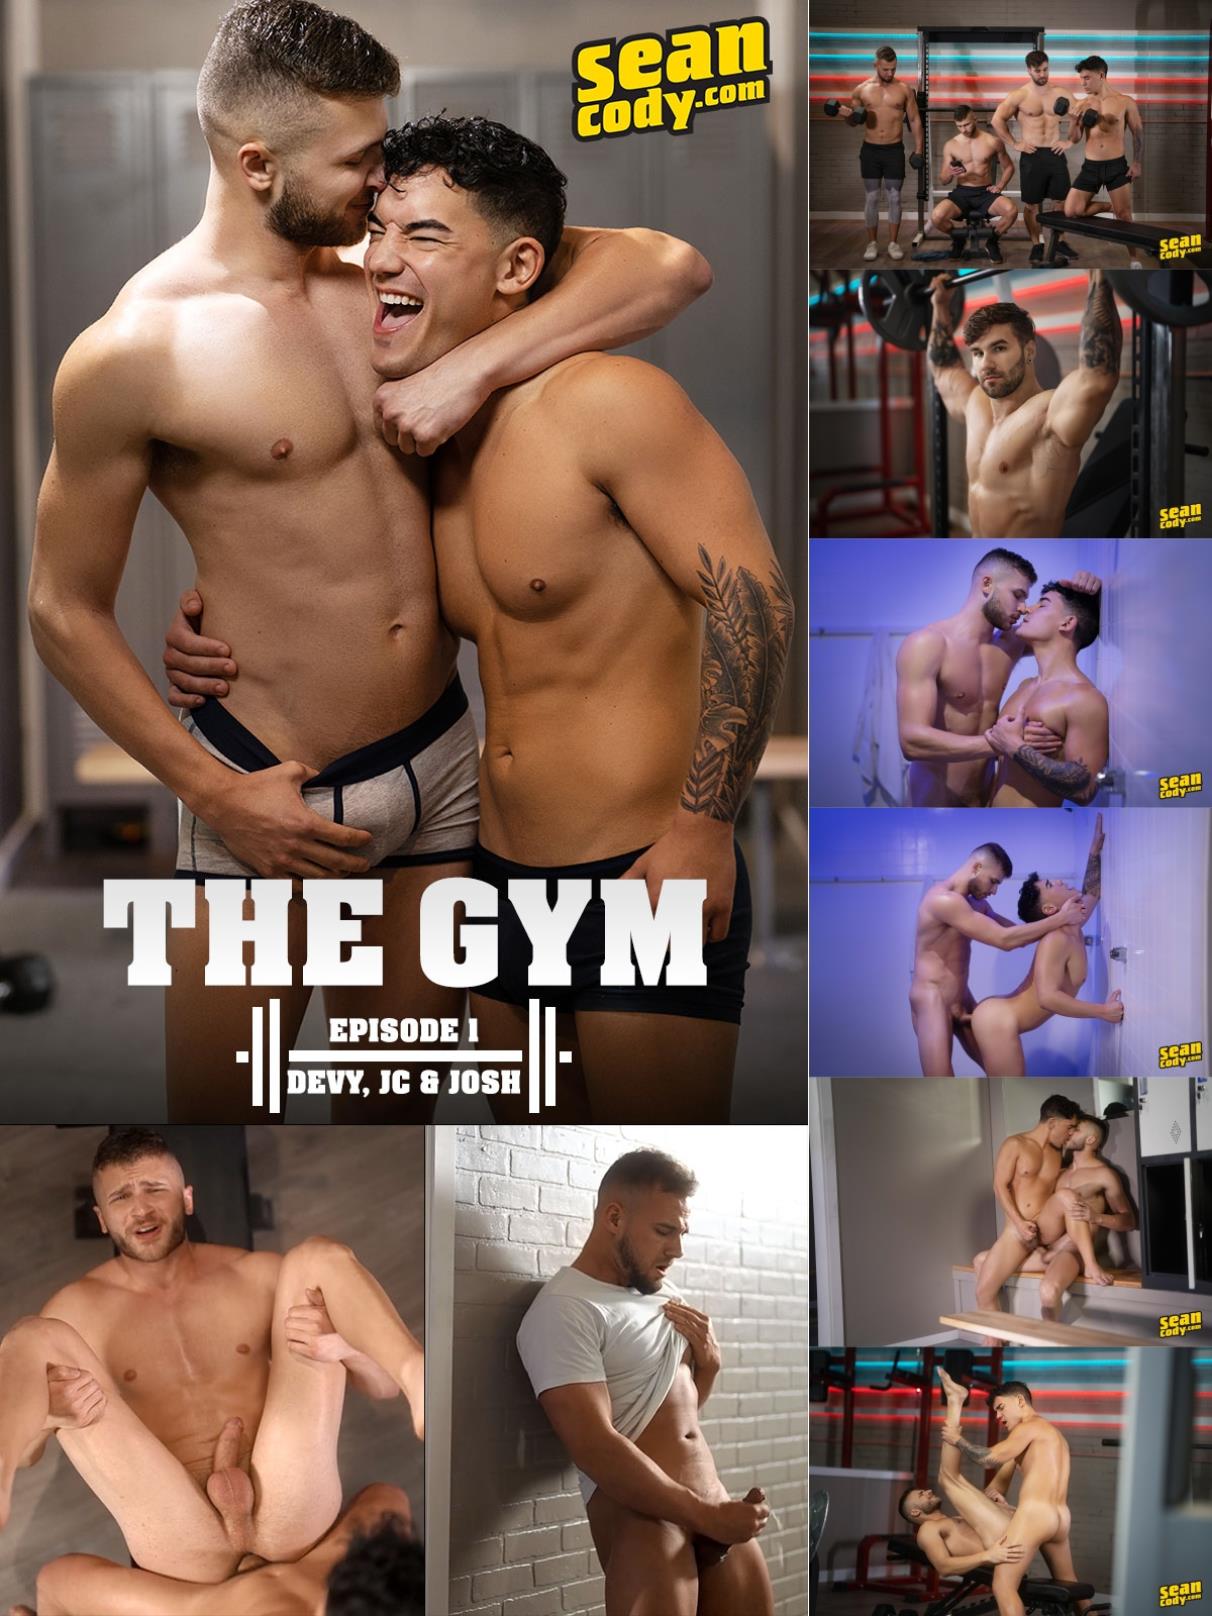 SeanCody - The Gym Episode 1 - Josh, Devy, JC